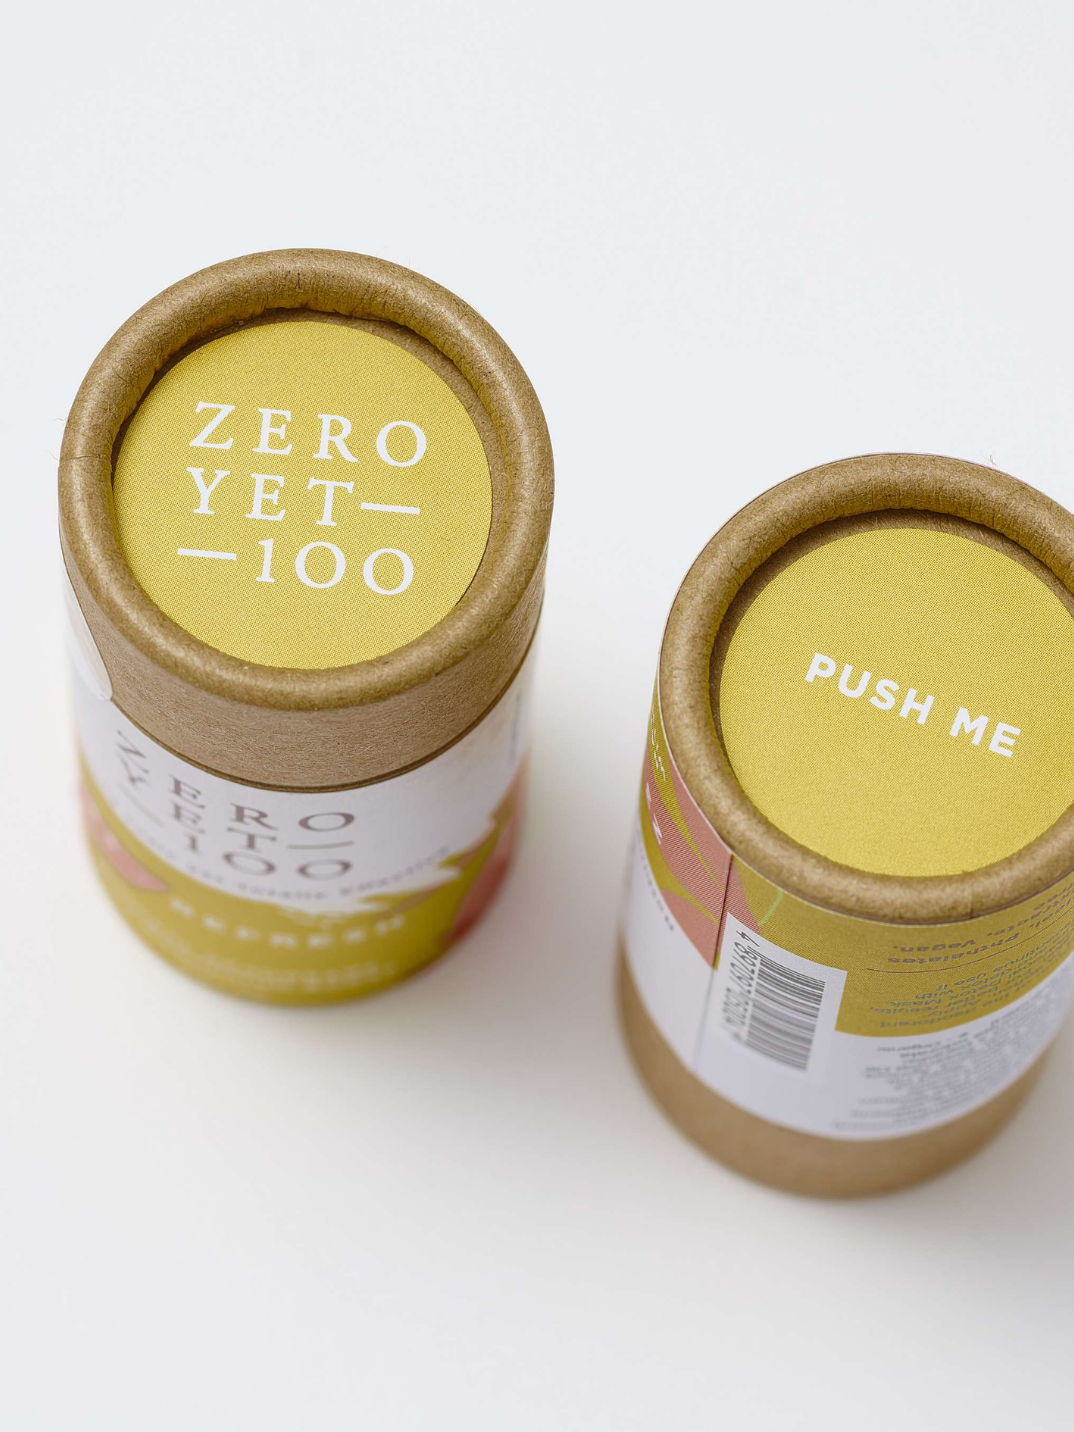 Z3 Refresher deodorant push-up stick Zero Yet 100